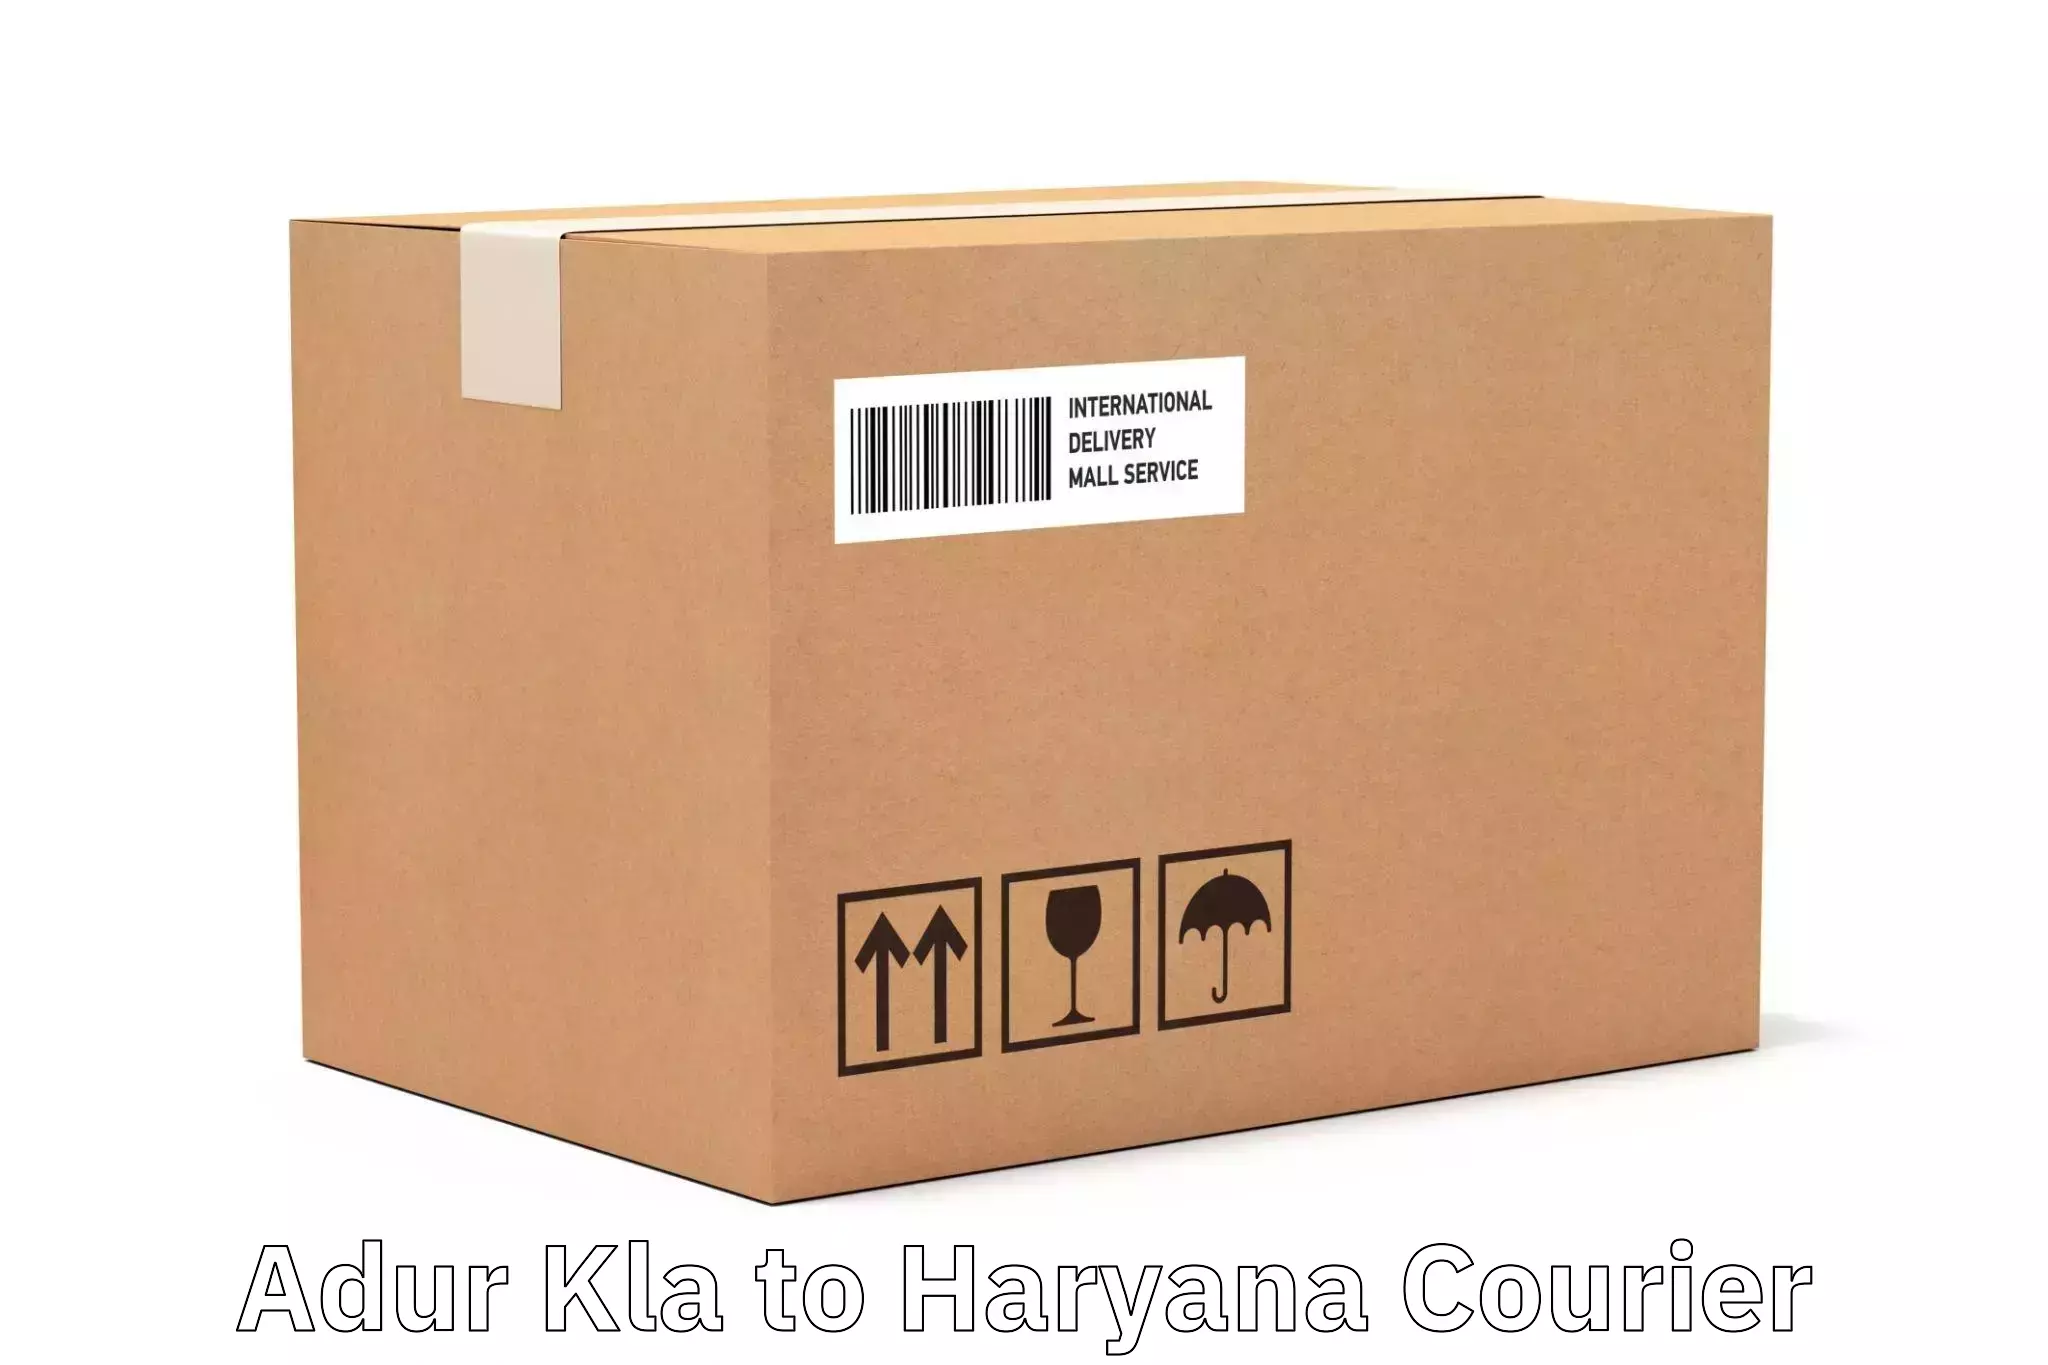 Cash on delivery service Adur Kla to Narwana